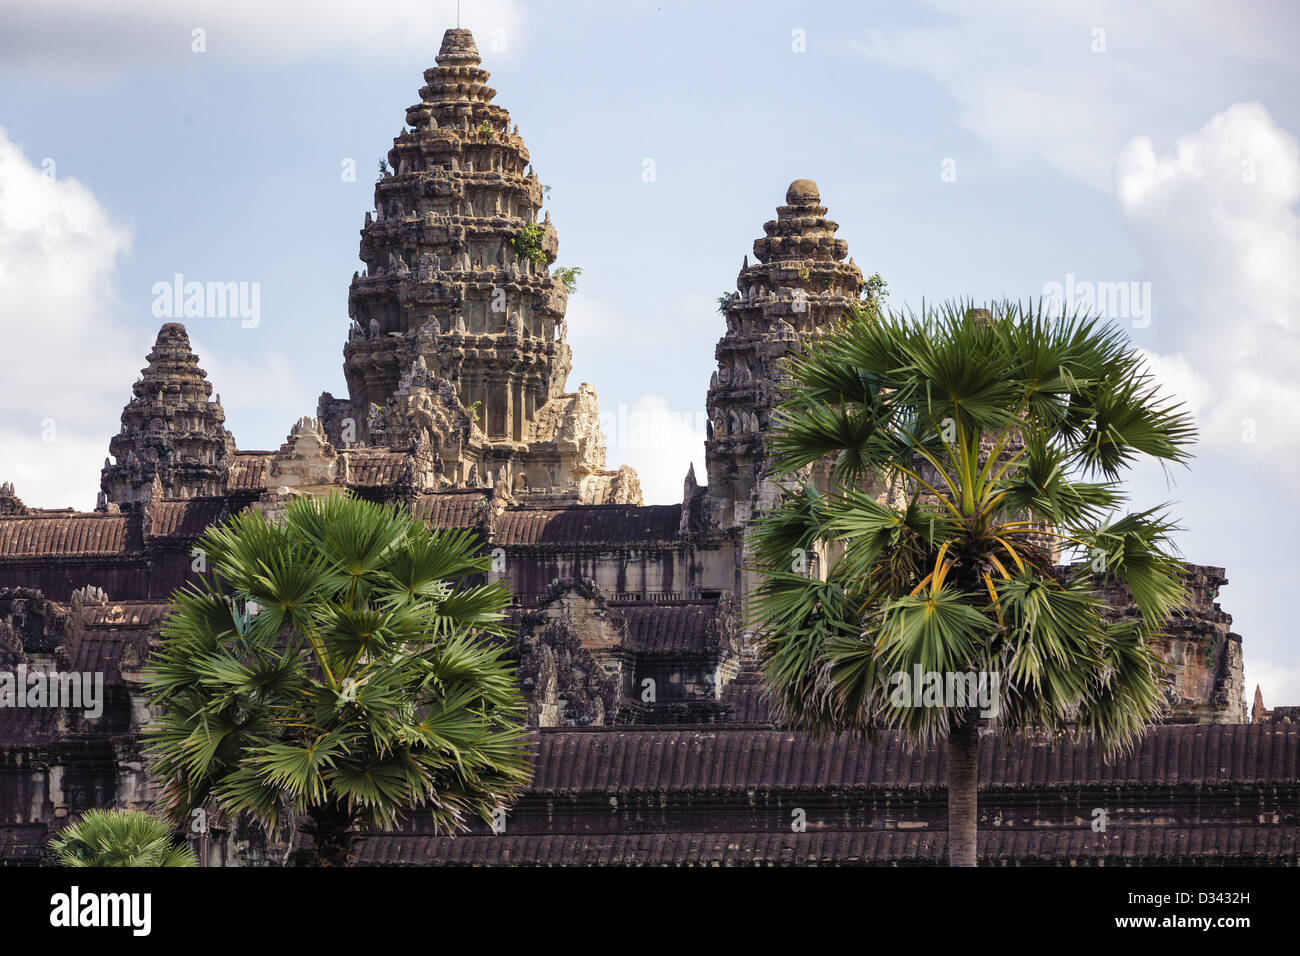 Angkor wat temple in Cambodia Stock Photo